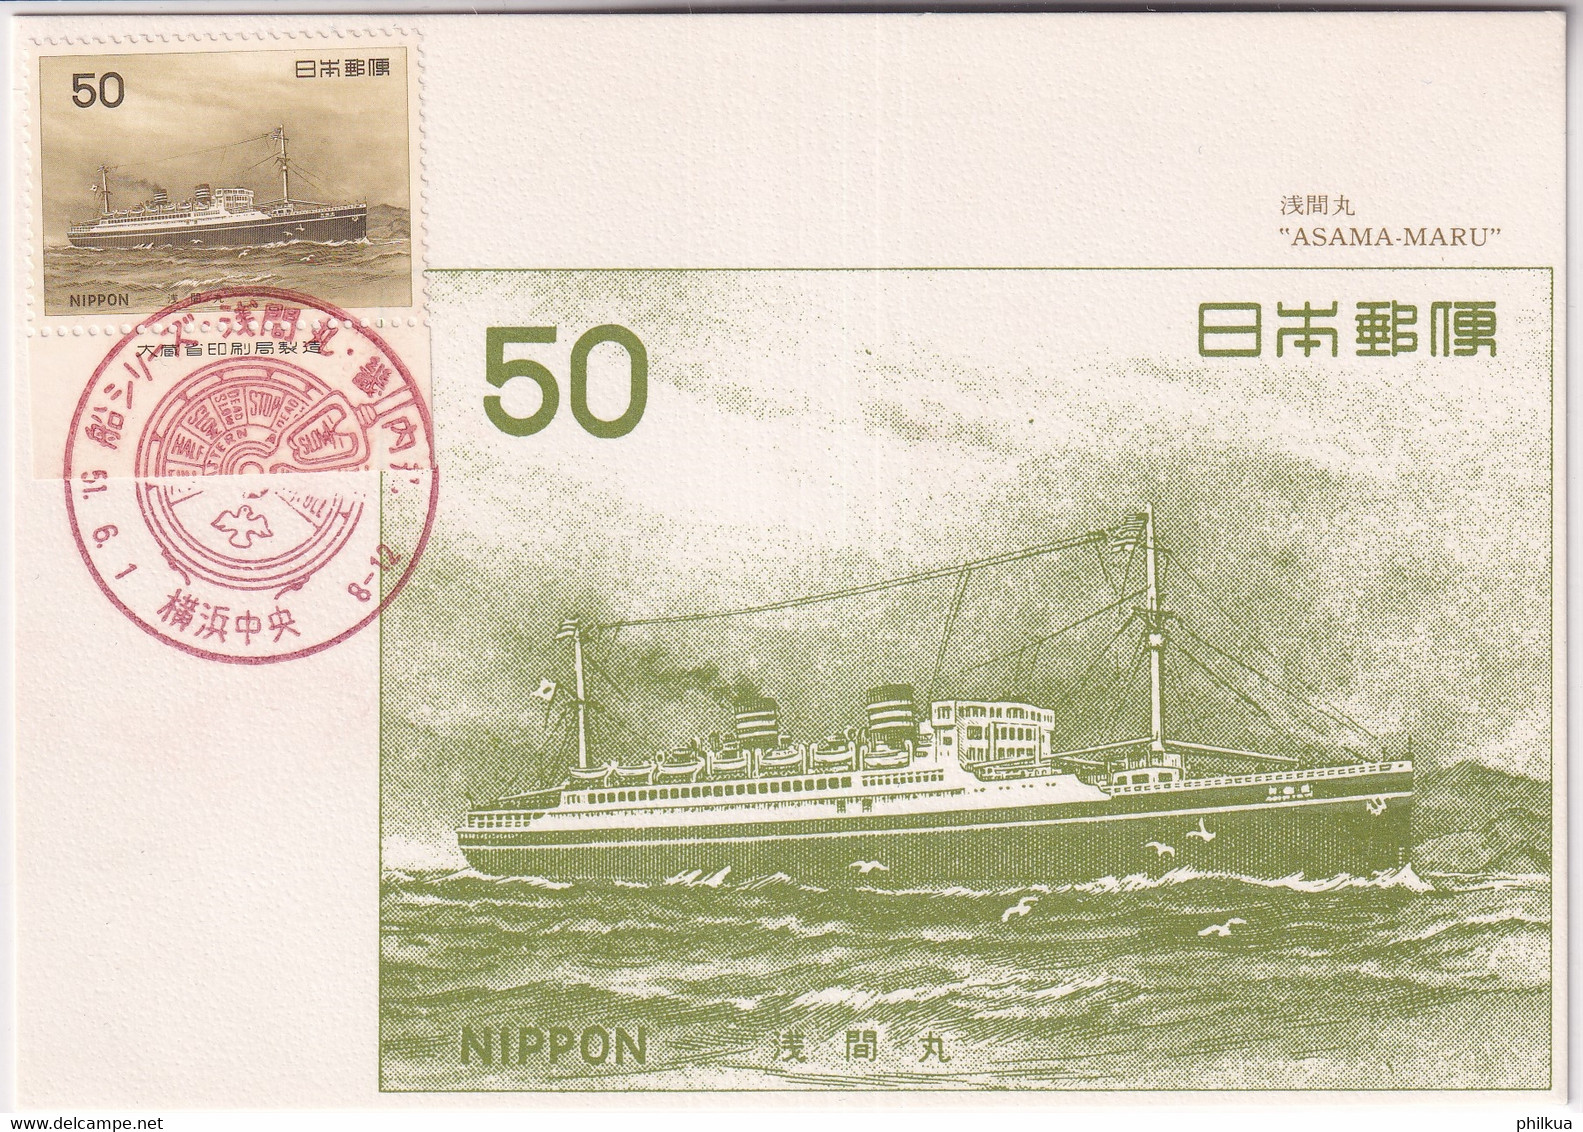 Japan - Schiffahrt: Segelschiffe, Boote - Expédition: Voiliers, Bateaux - Shipping: Sailing Ships, Boats - Marítimo